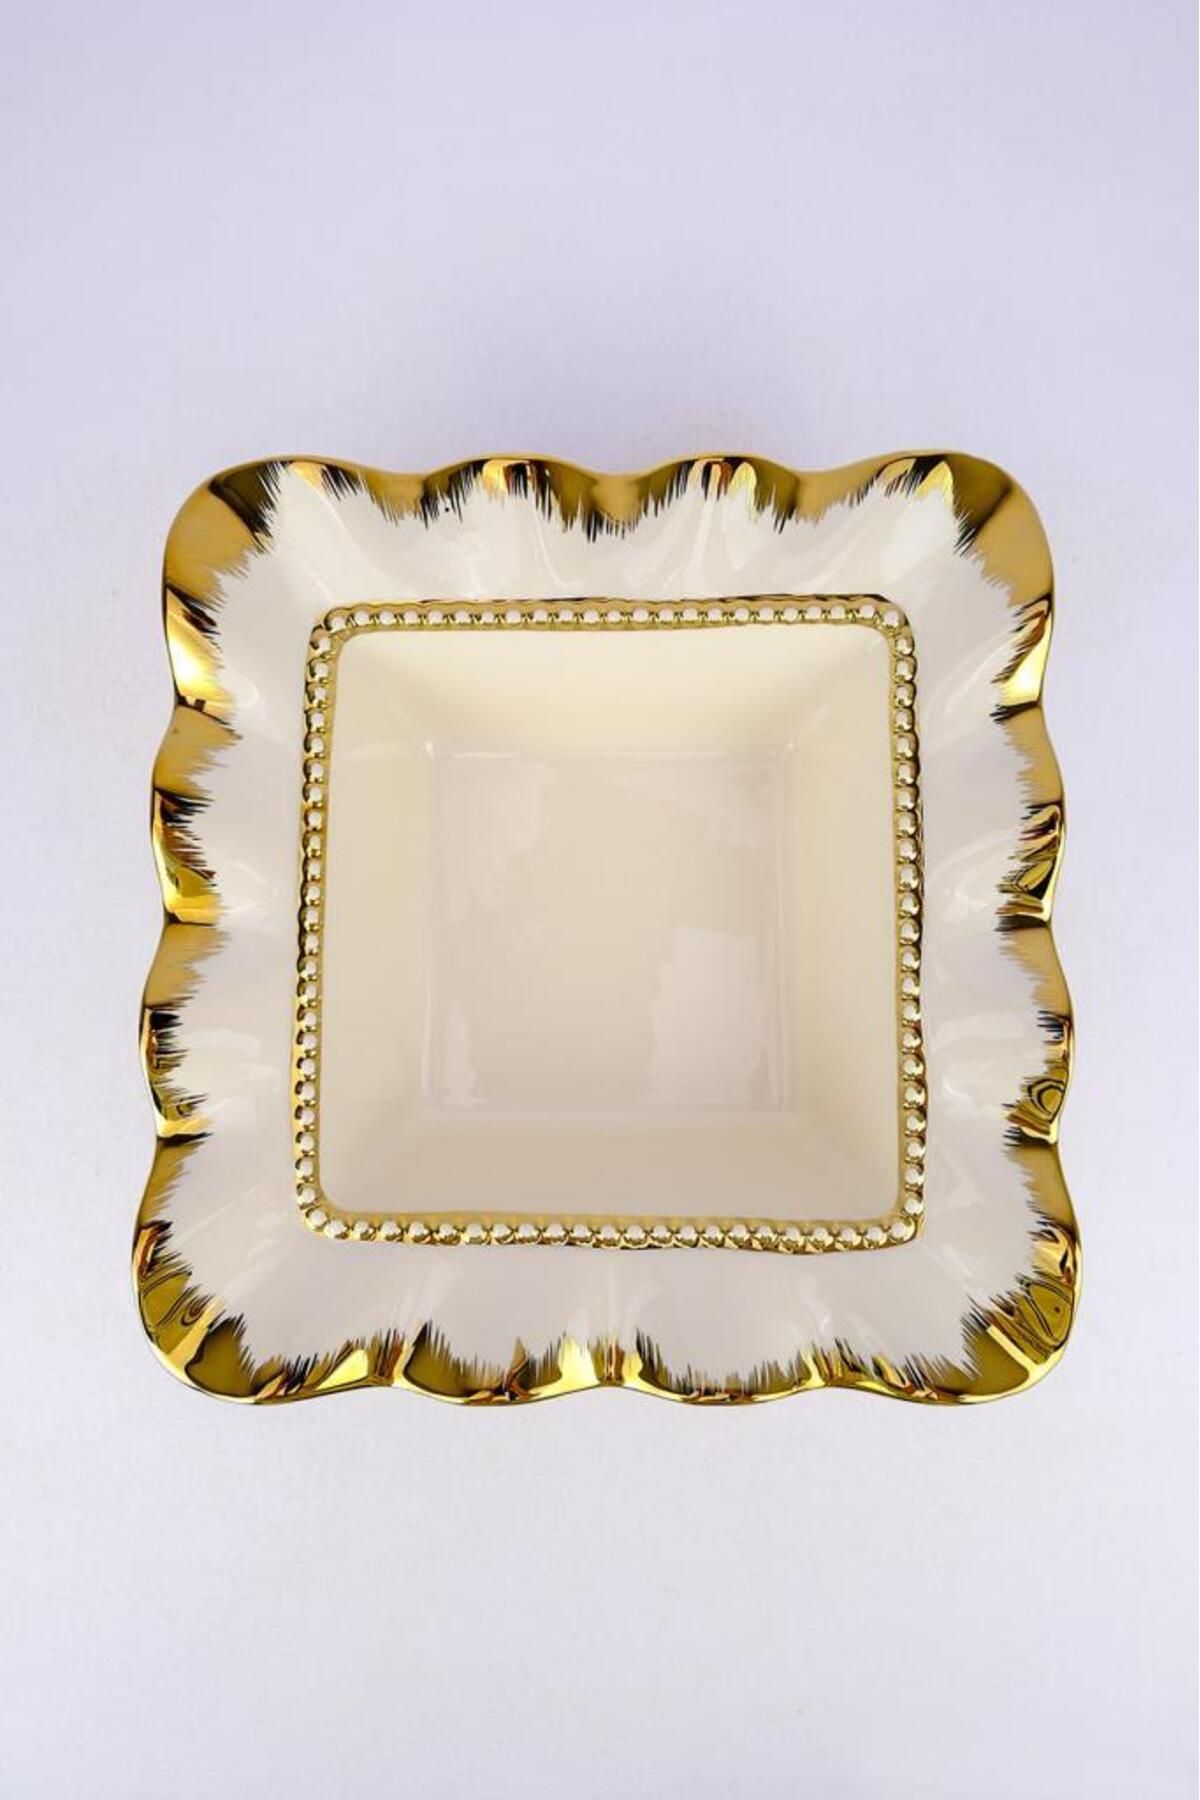 Digithome Avangarde Porselen Kare Salata Servis Kasesi Meyvelik 27 Cm Gold – Gbo 088 C320.113